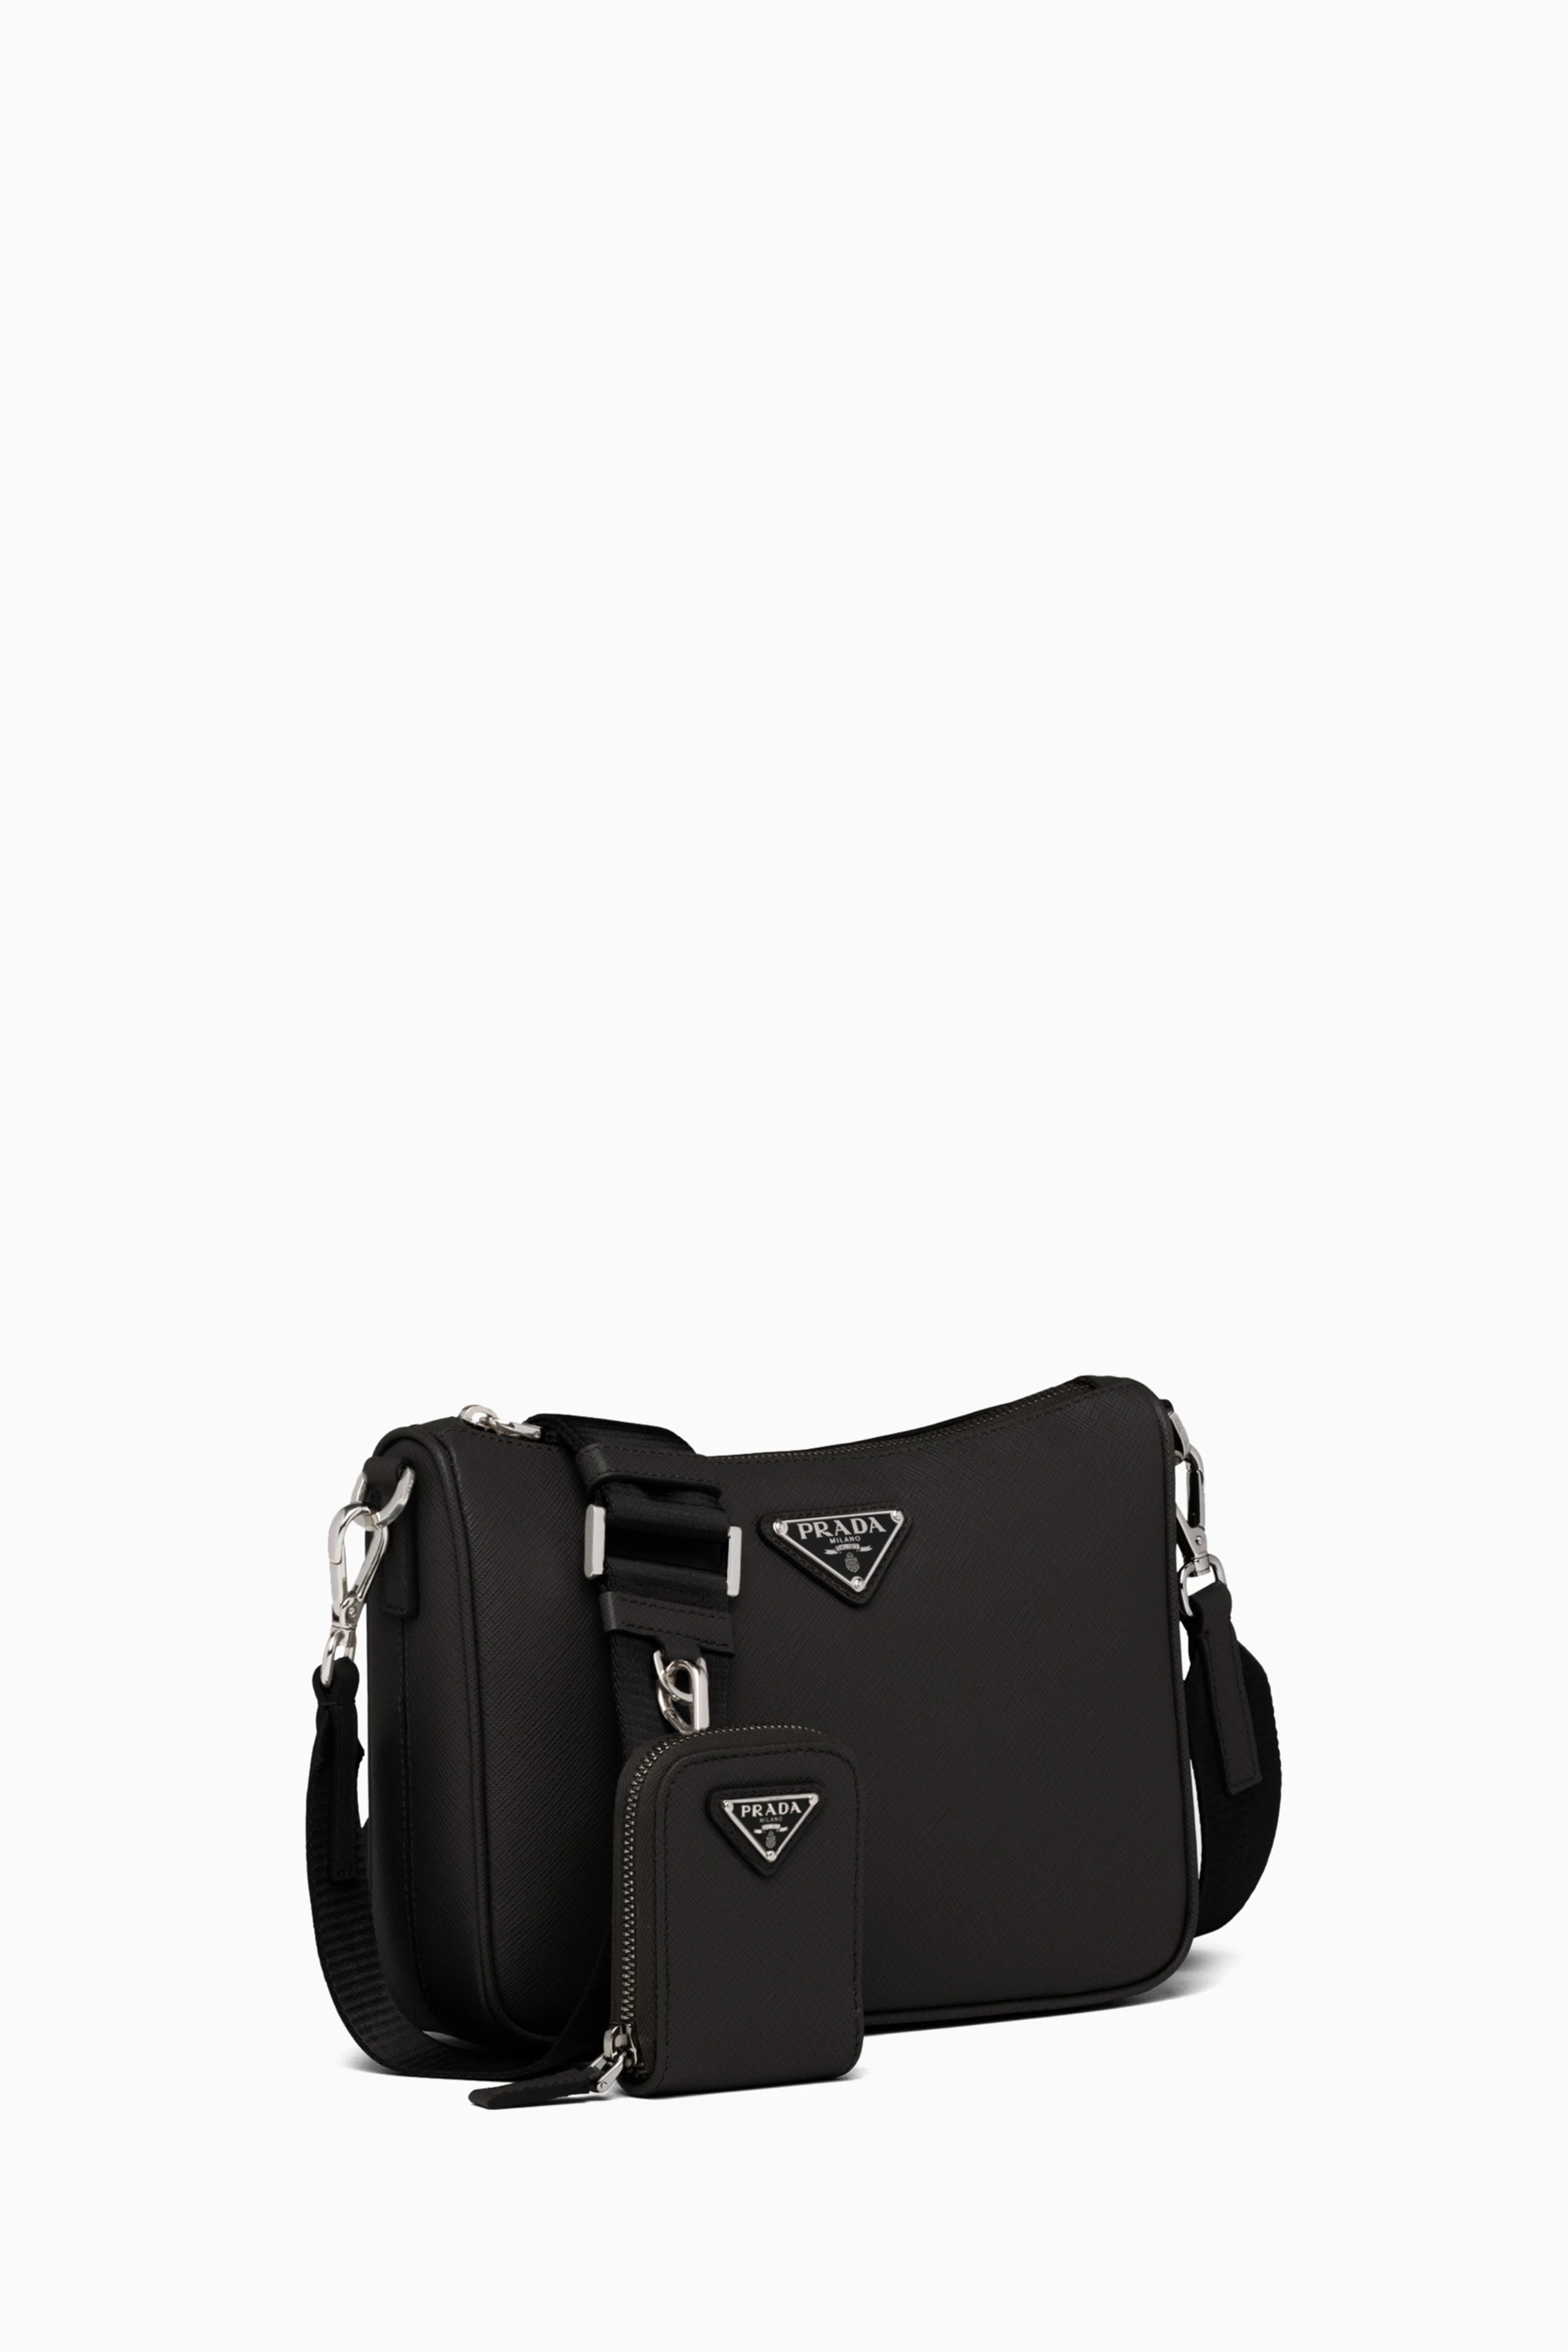 Shop Prada Black Shoulder Bag in Saffiano Leather for MEN | Ounass Saudi  Arabia